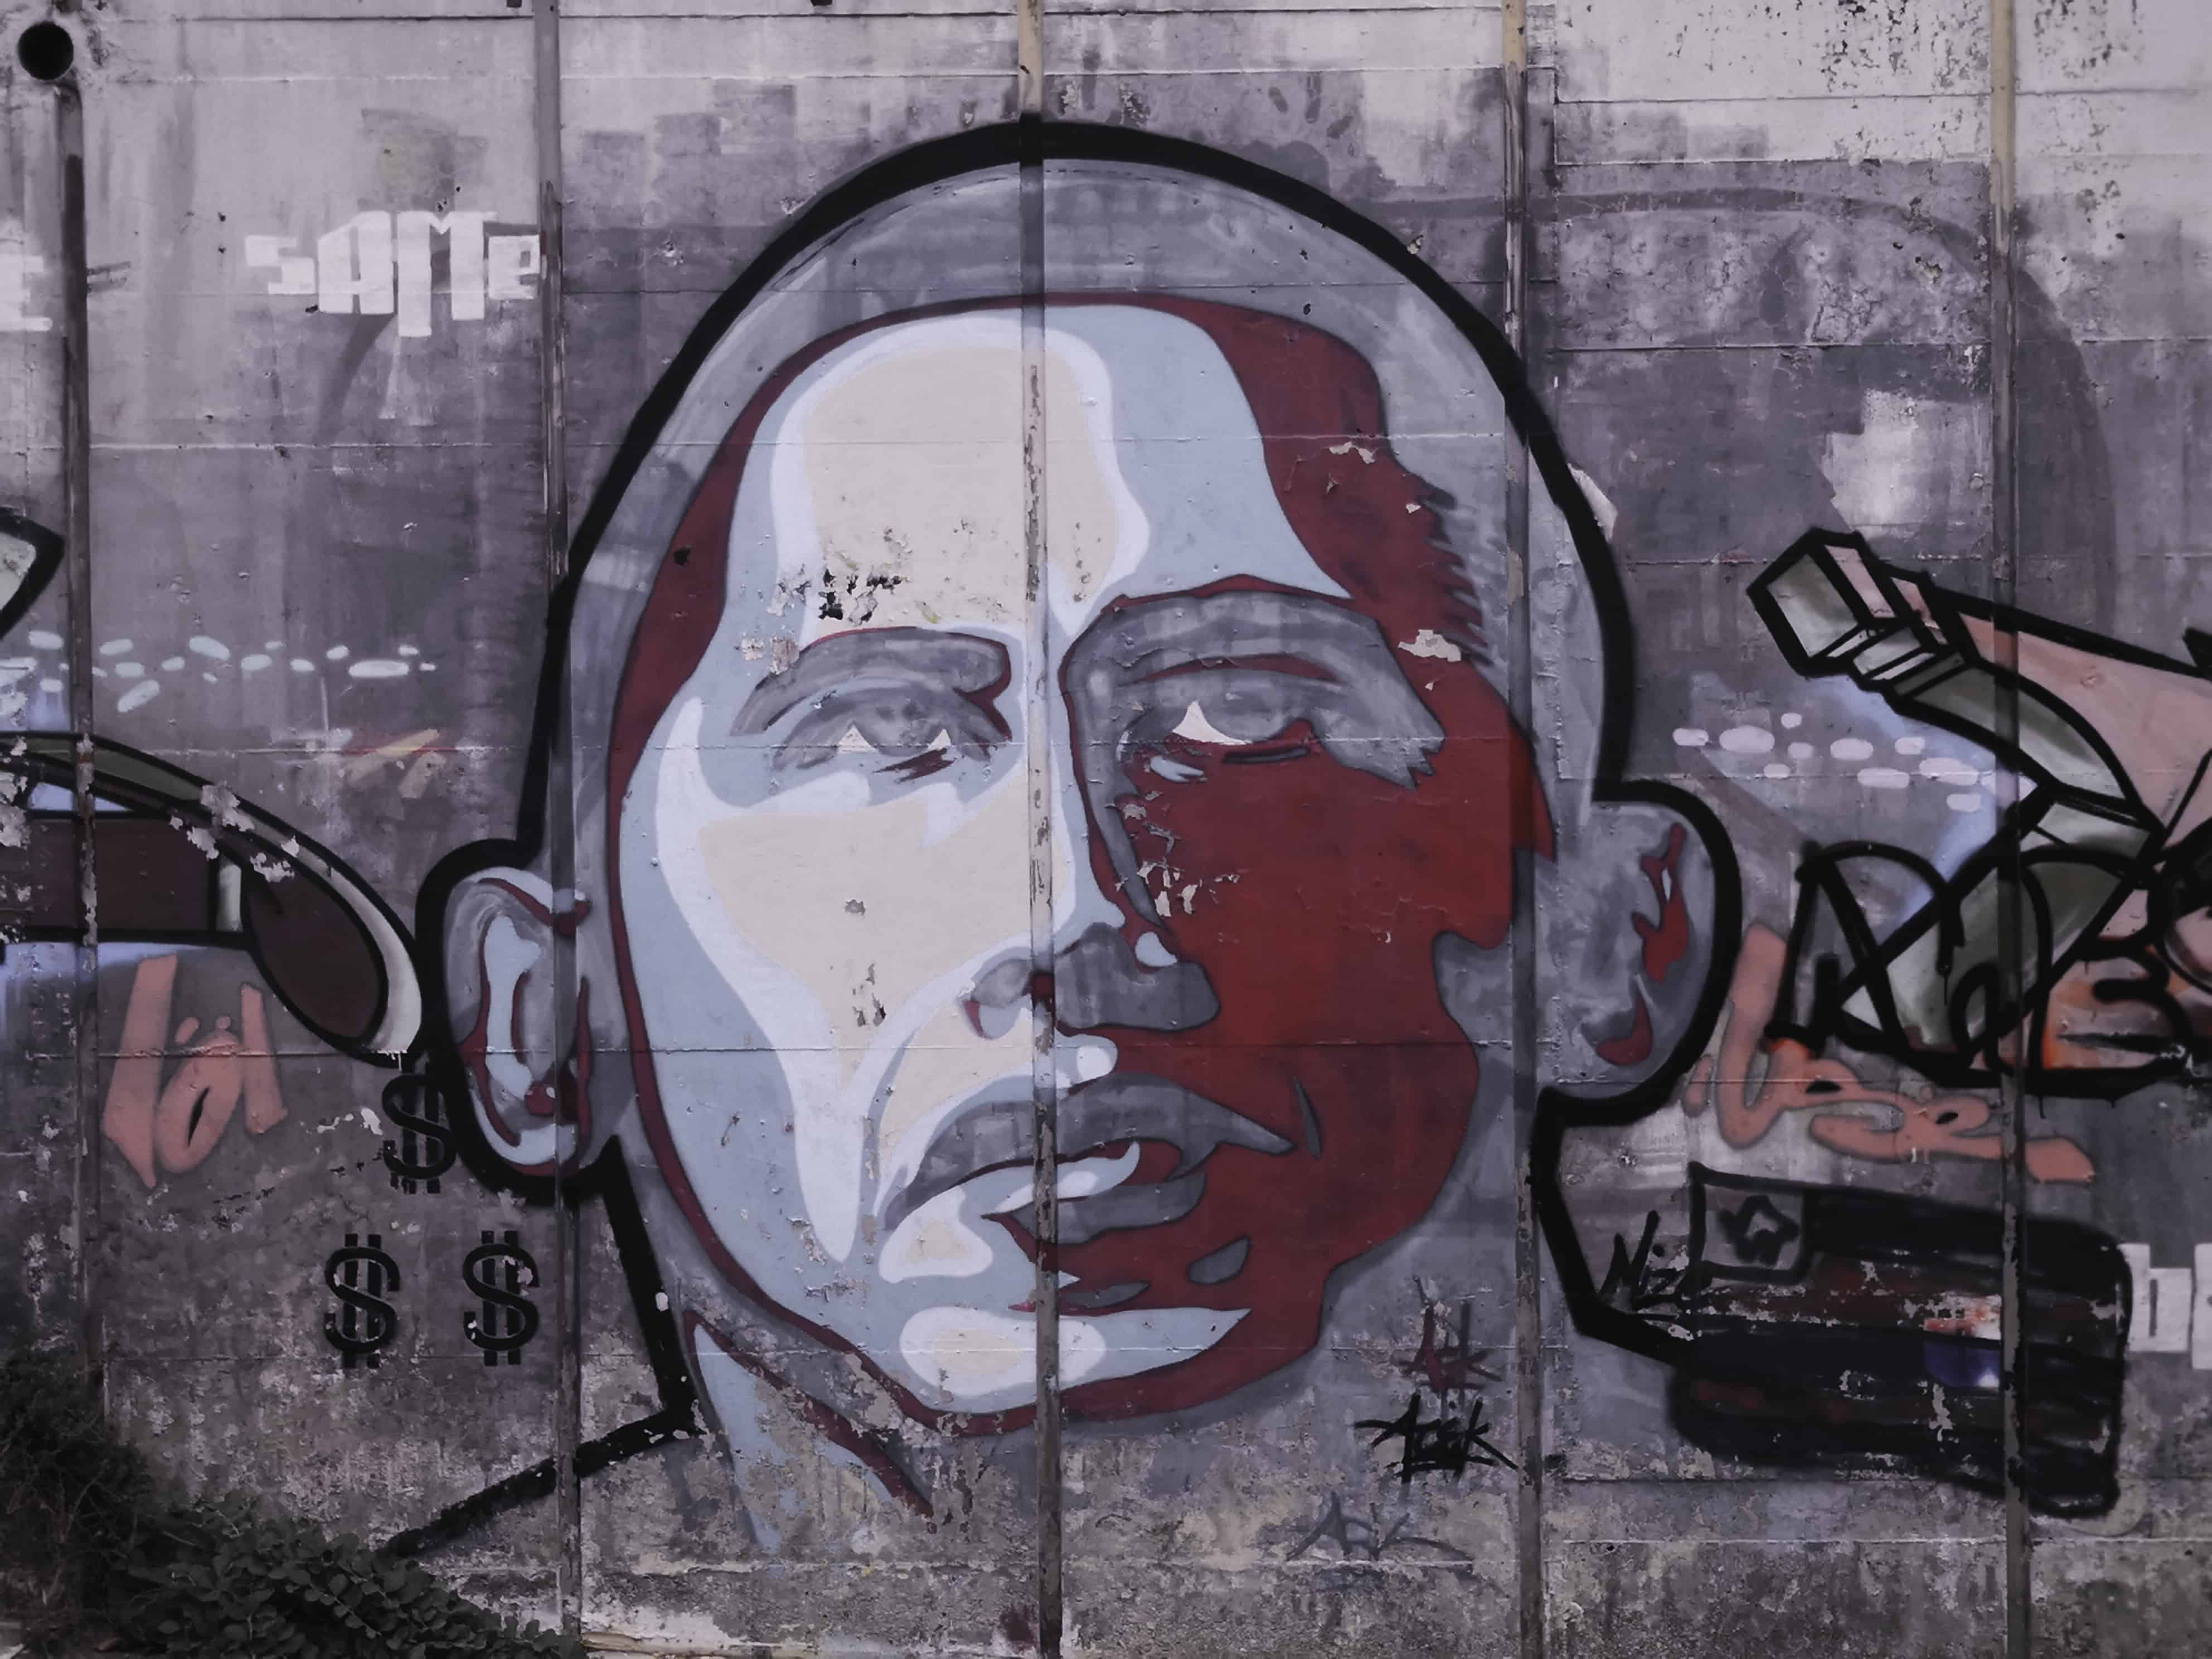 Who is Barack graffiti